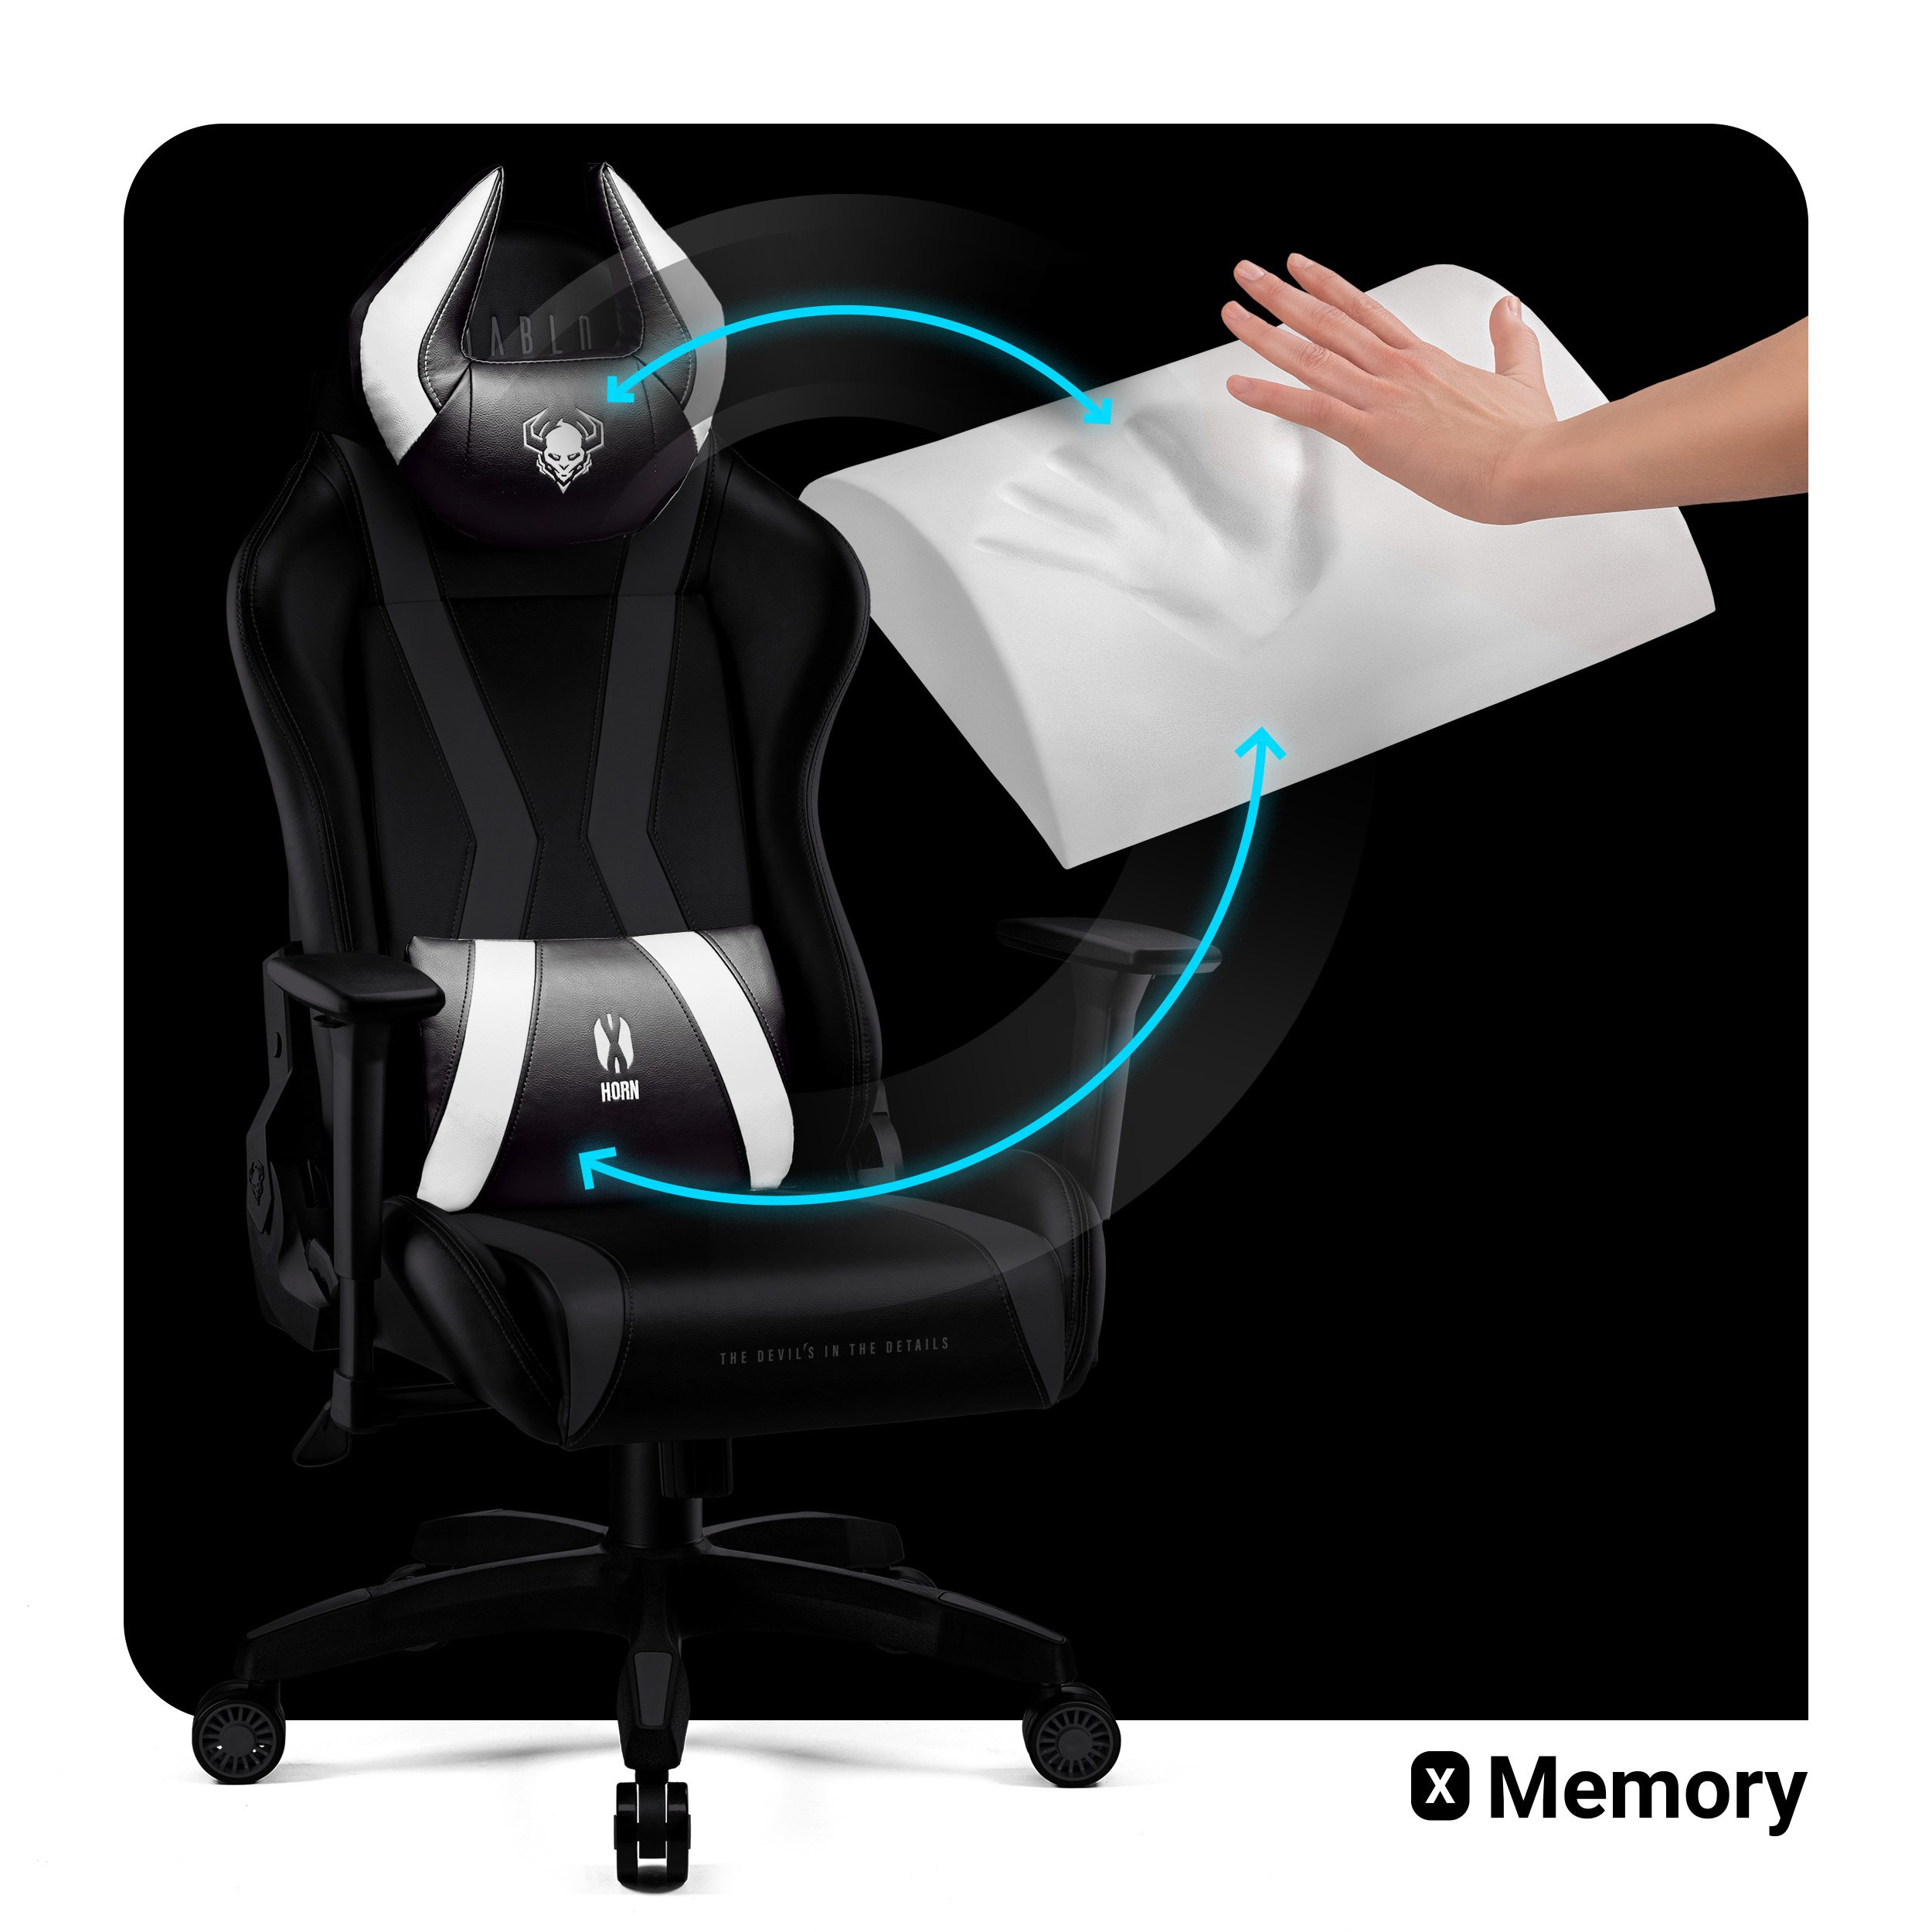 DIABLO CHAIRS GAMING STUHL Gaming Chair, black/white NORMAL 2.0 X-HORN